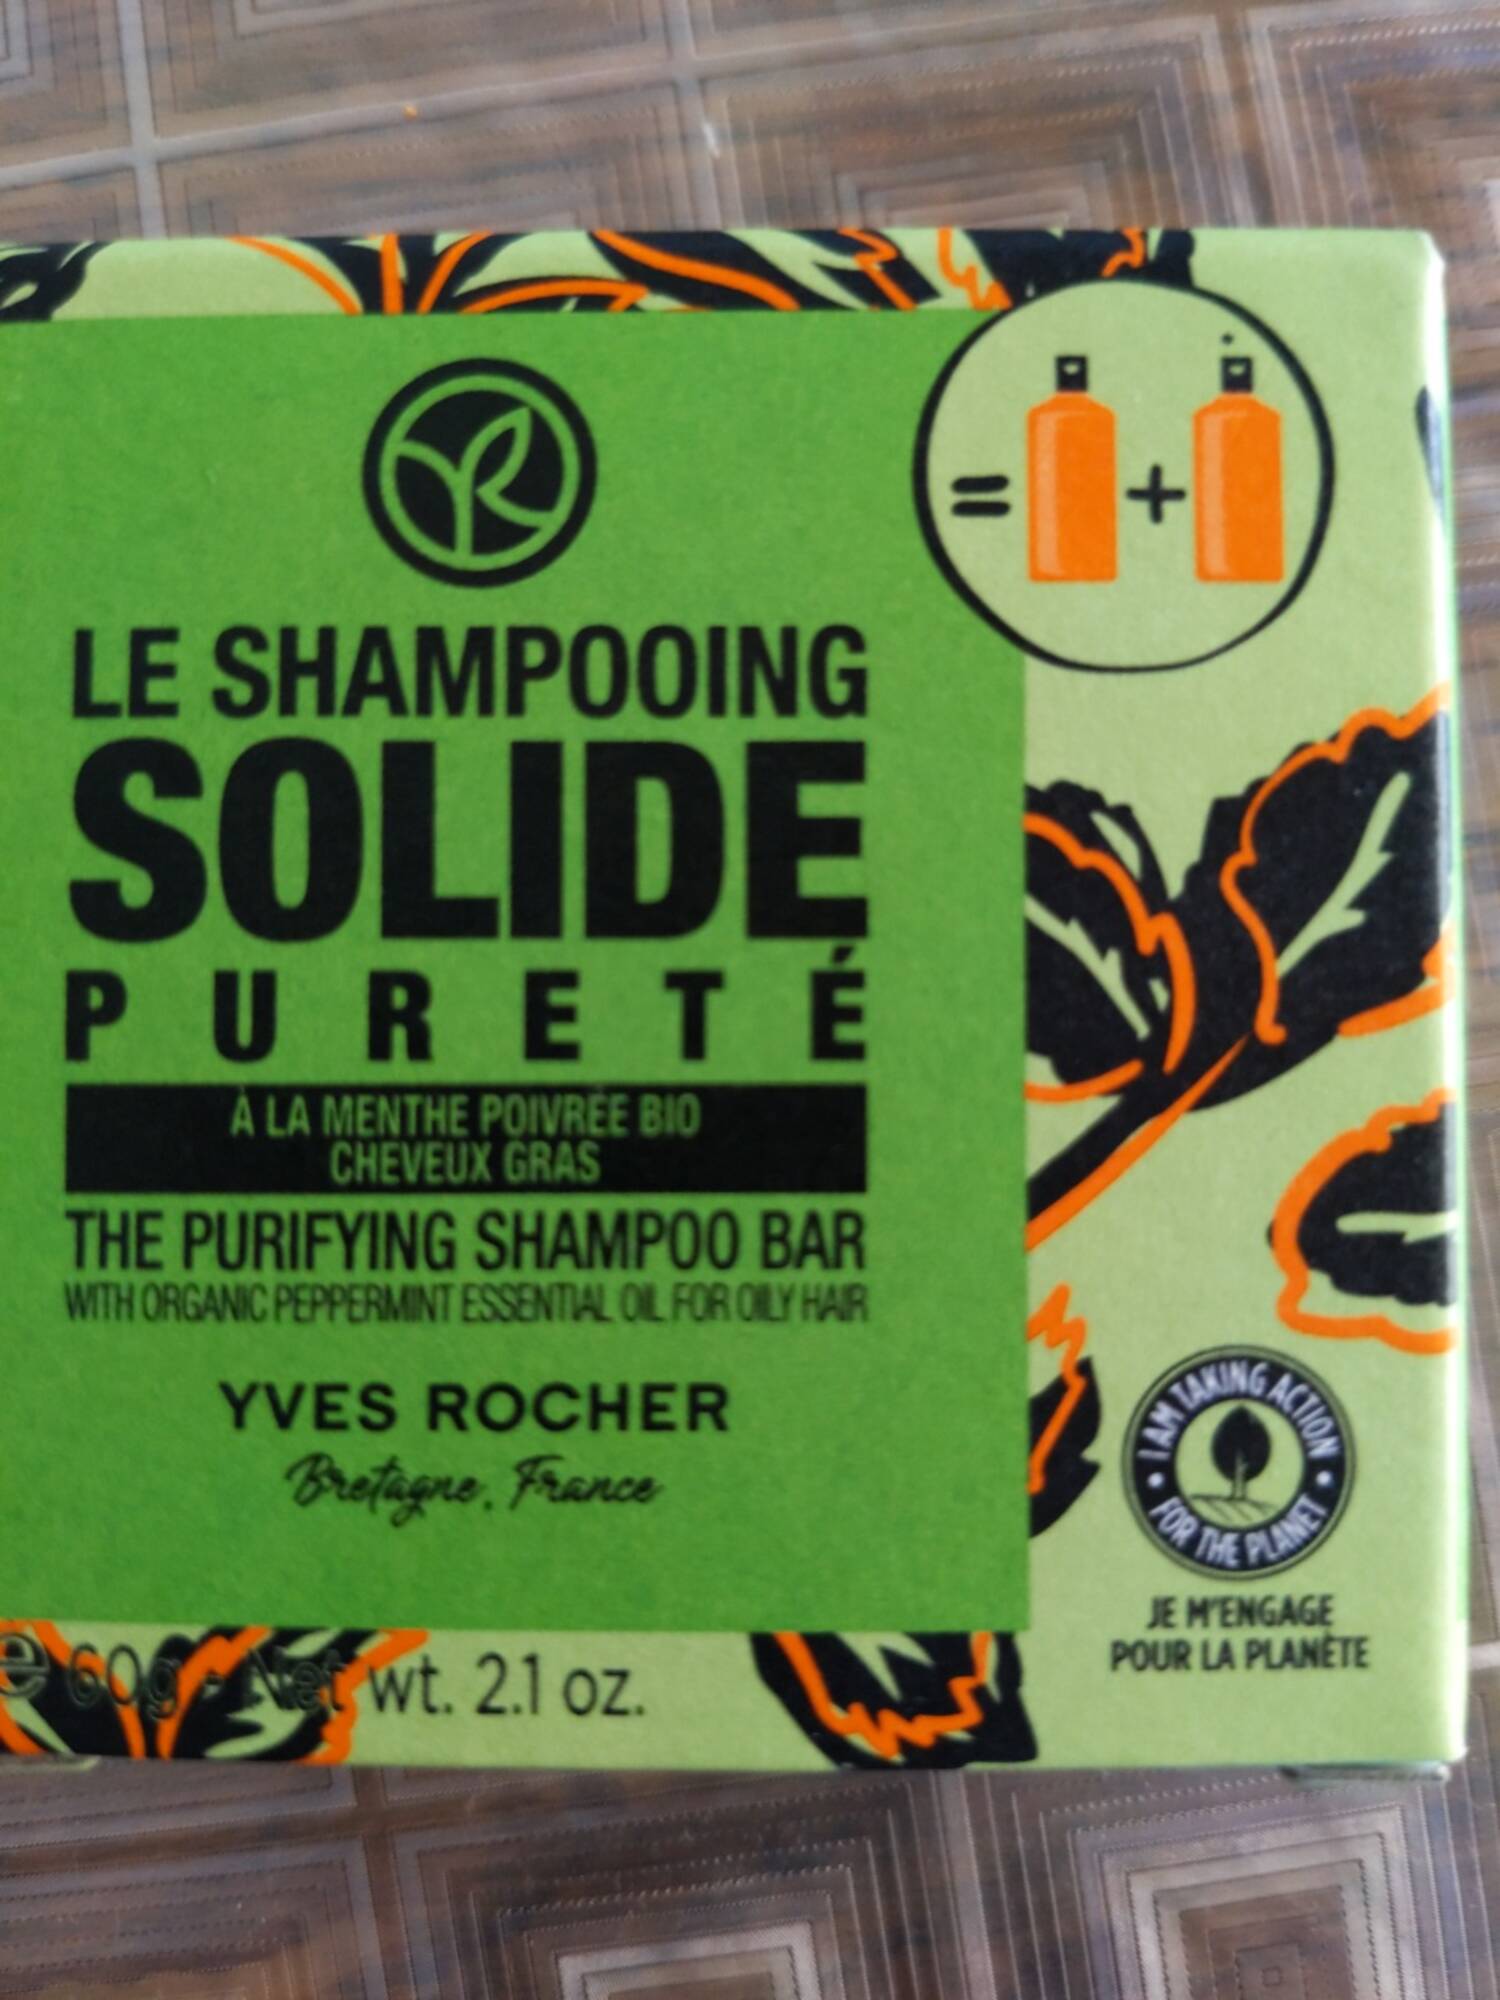 YVES ROCHER - Le shampoing solide pureté